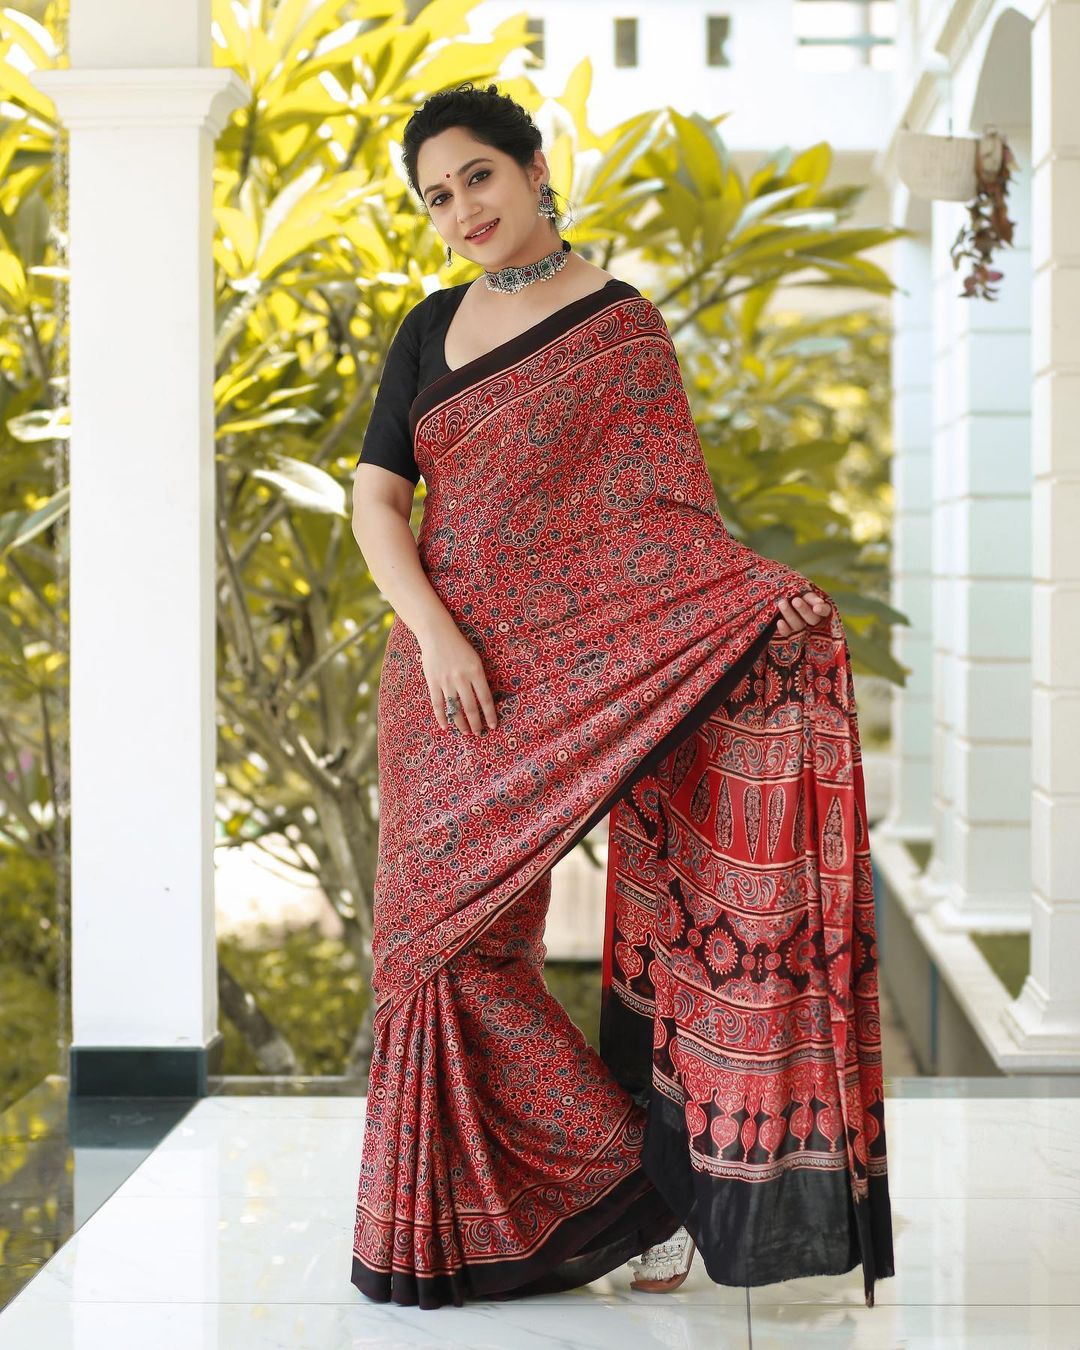 Malayalam Actress Miya George Images in Maroon Saree Black Blouse